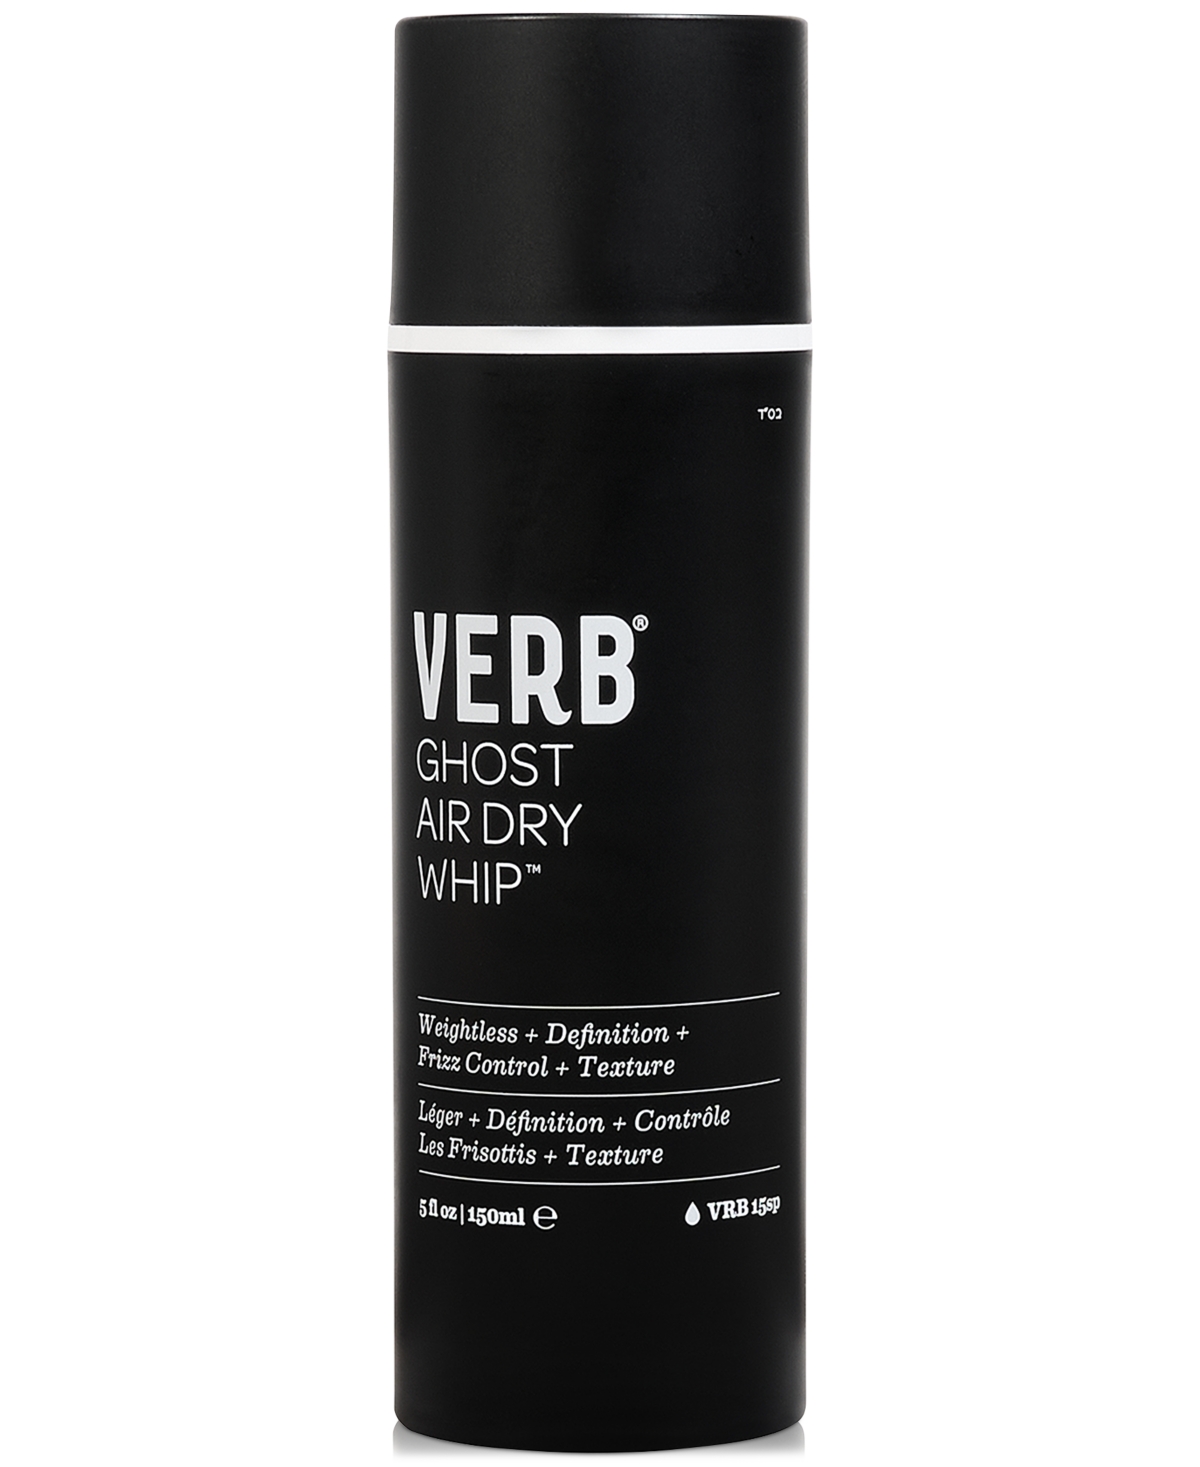 Verb Ghost Air Dry Hair Styling Whip 5 oz / 150 ml